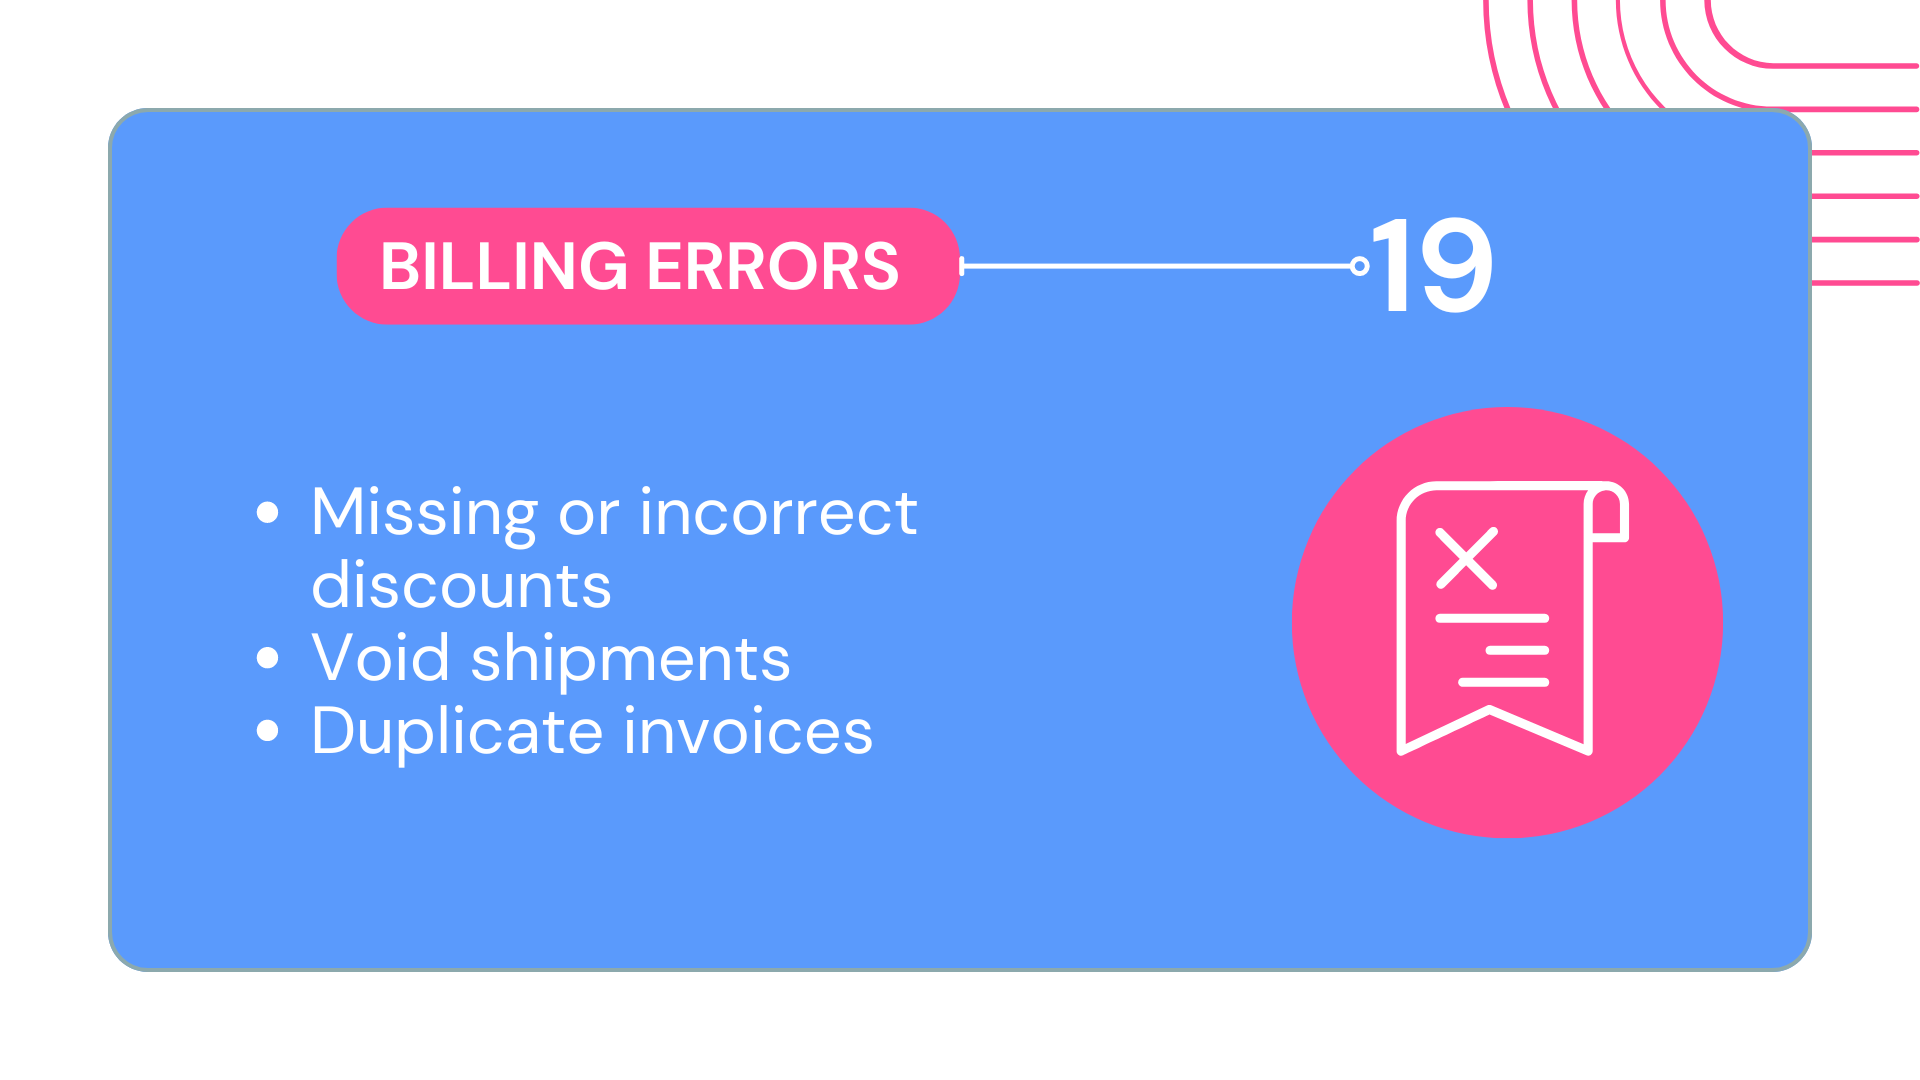 Billing errors